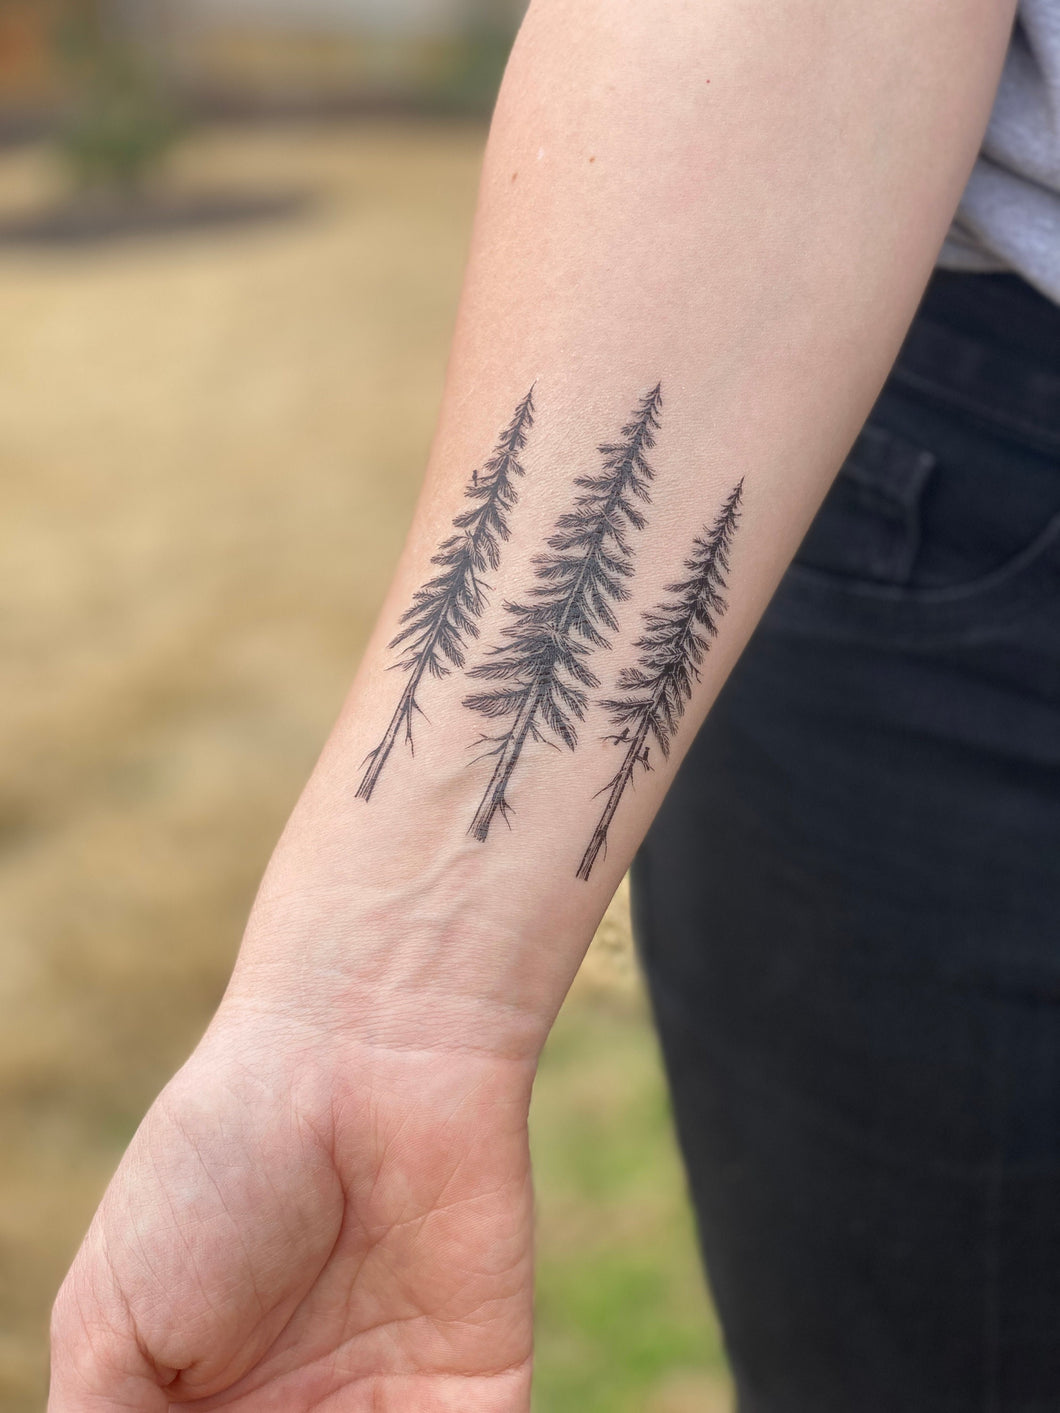 Full arm sleeve tattoo with scary tree tattoo idea | TattoosAI